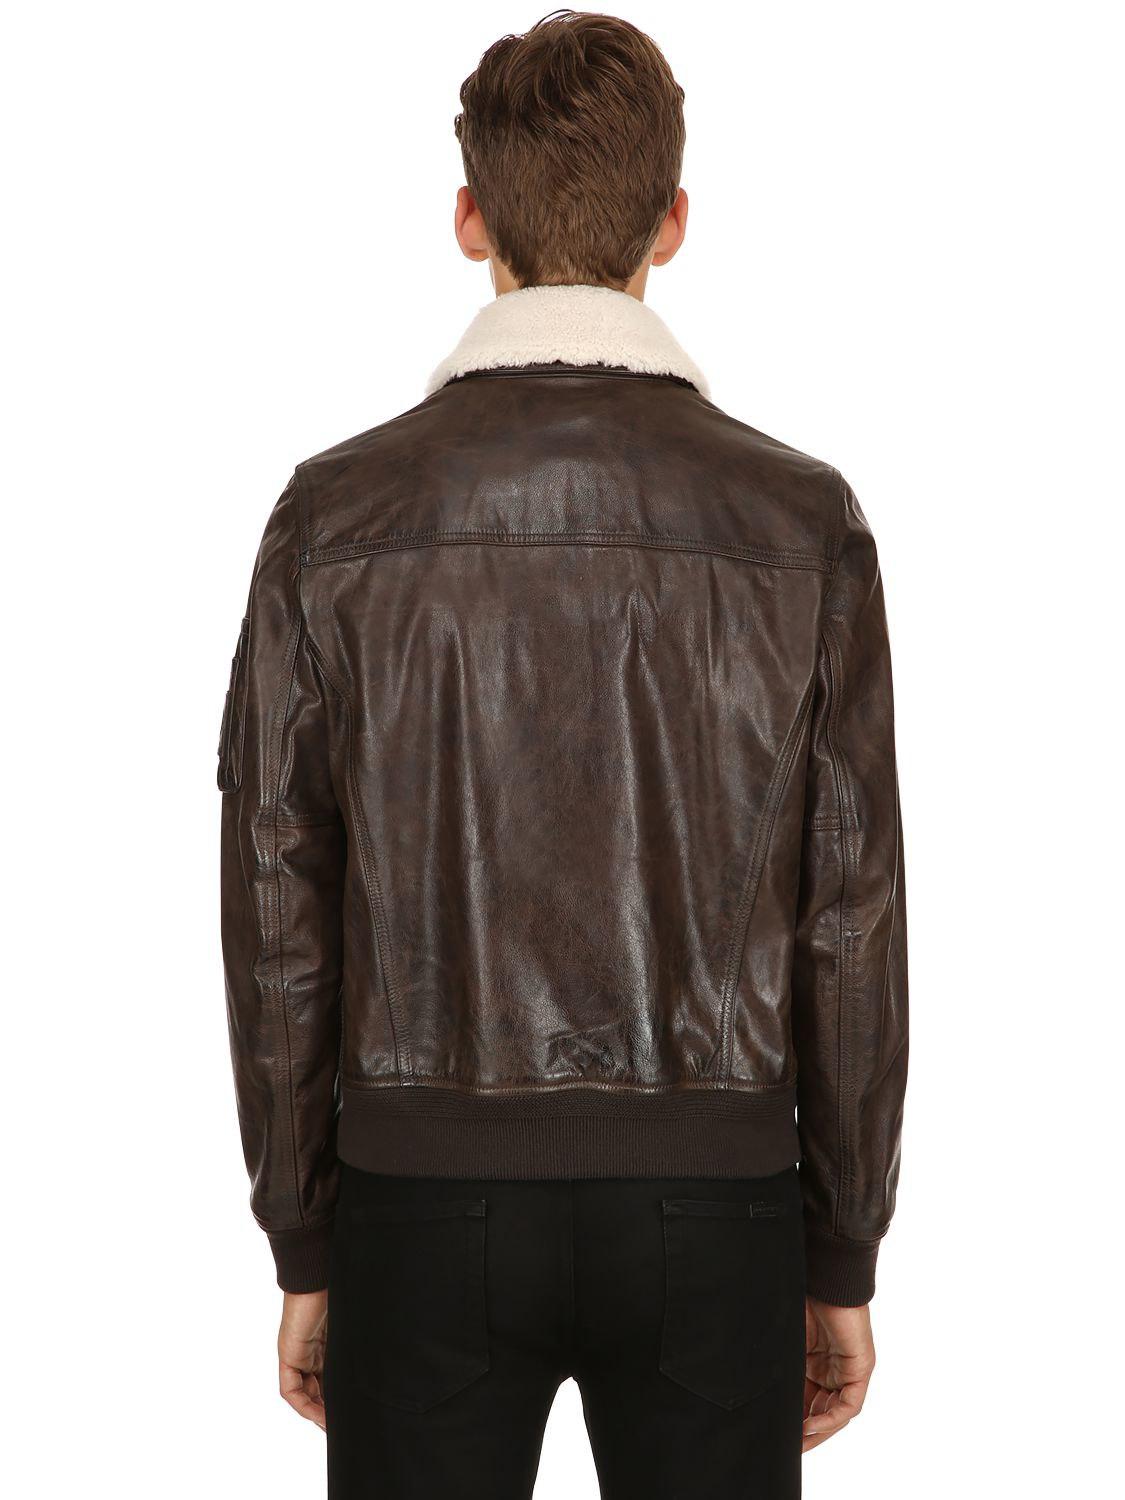 Belstaff Arne Leather Aviator Jacket in Dark Brown (Brown) for Men - Lyst